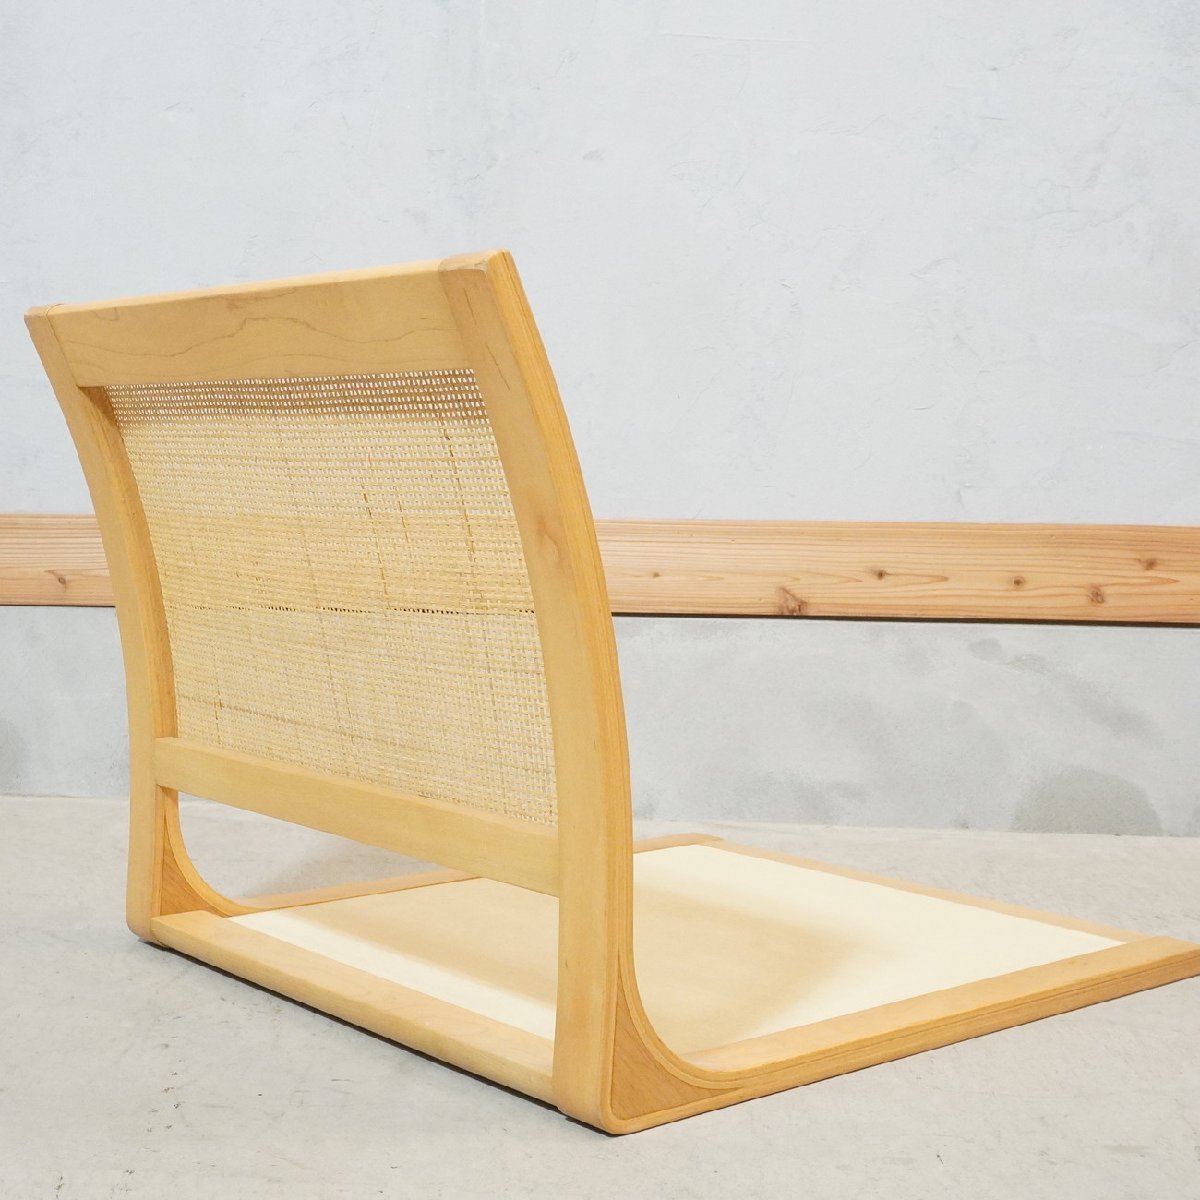 TENDO 天童木工 メープル材 座椅子 5559MP 2脚セット 原好輝 ローチェア ラタン 籐 和モダン シンプル ナチュラル レトロ 国産 EA354_画像7